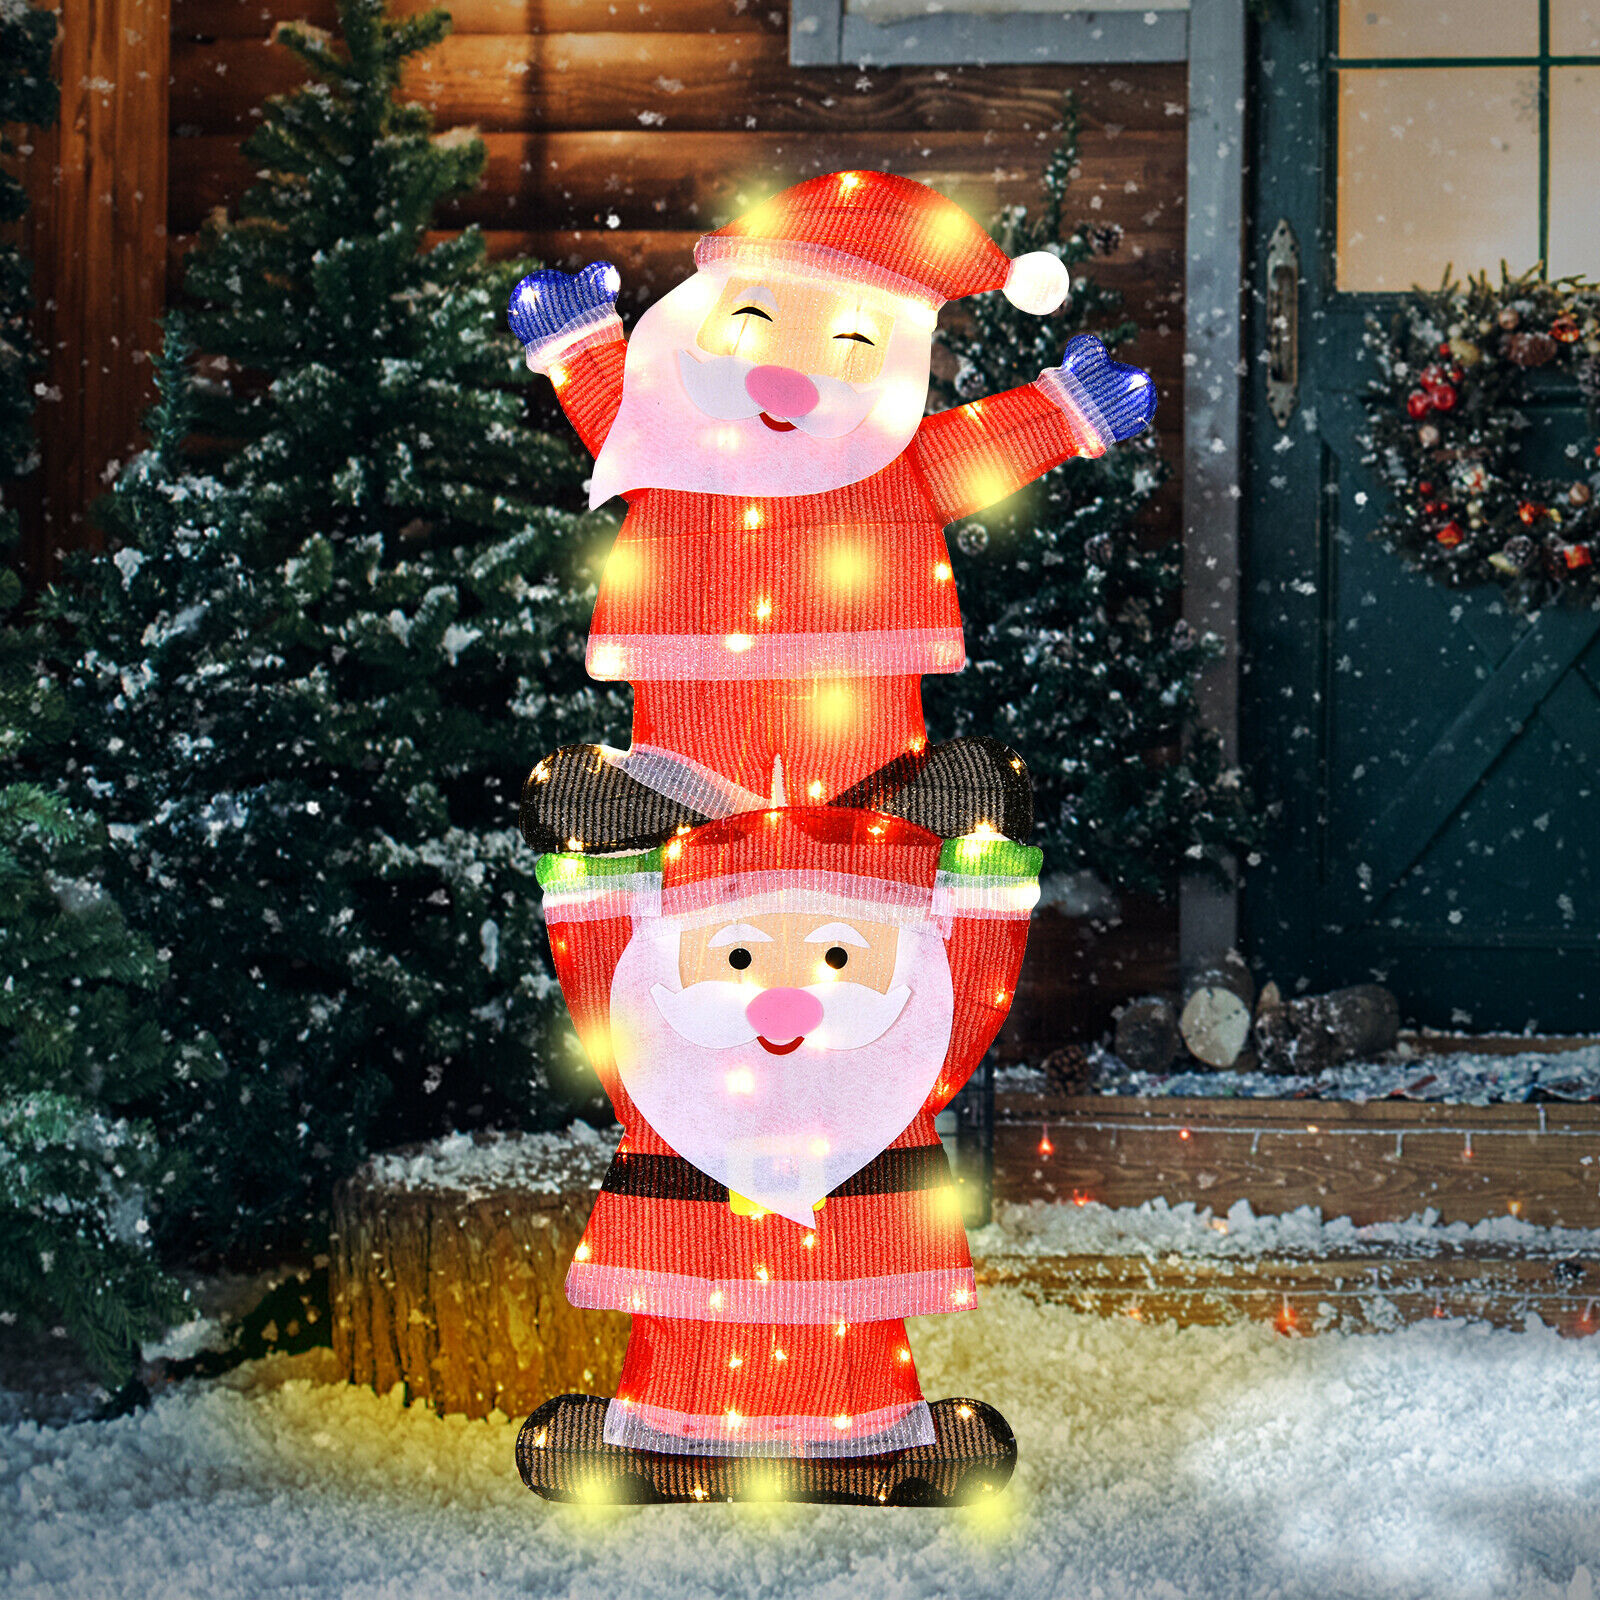 Topbuy LED Double Santa Yard Sign Santa Christmas Decoration W/ String Lights & Stakes